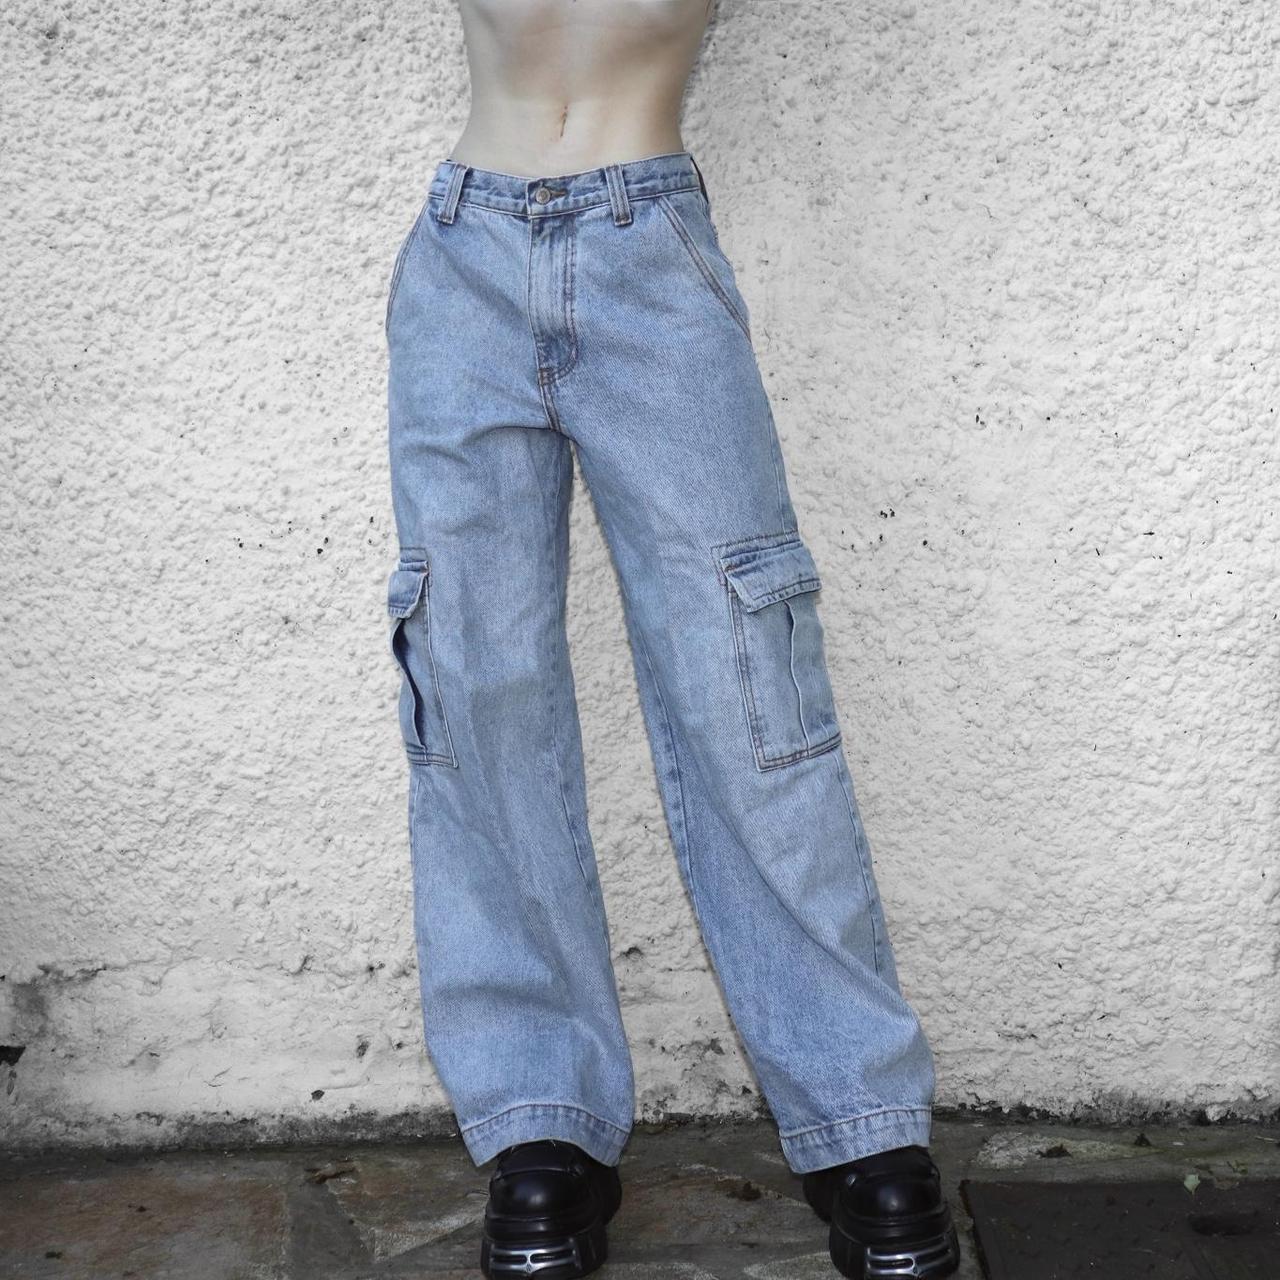 BRANDY MELVILLE jeans - Tatum jeans - can be low... - Depop